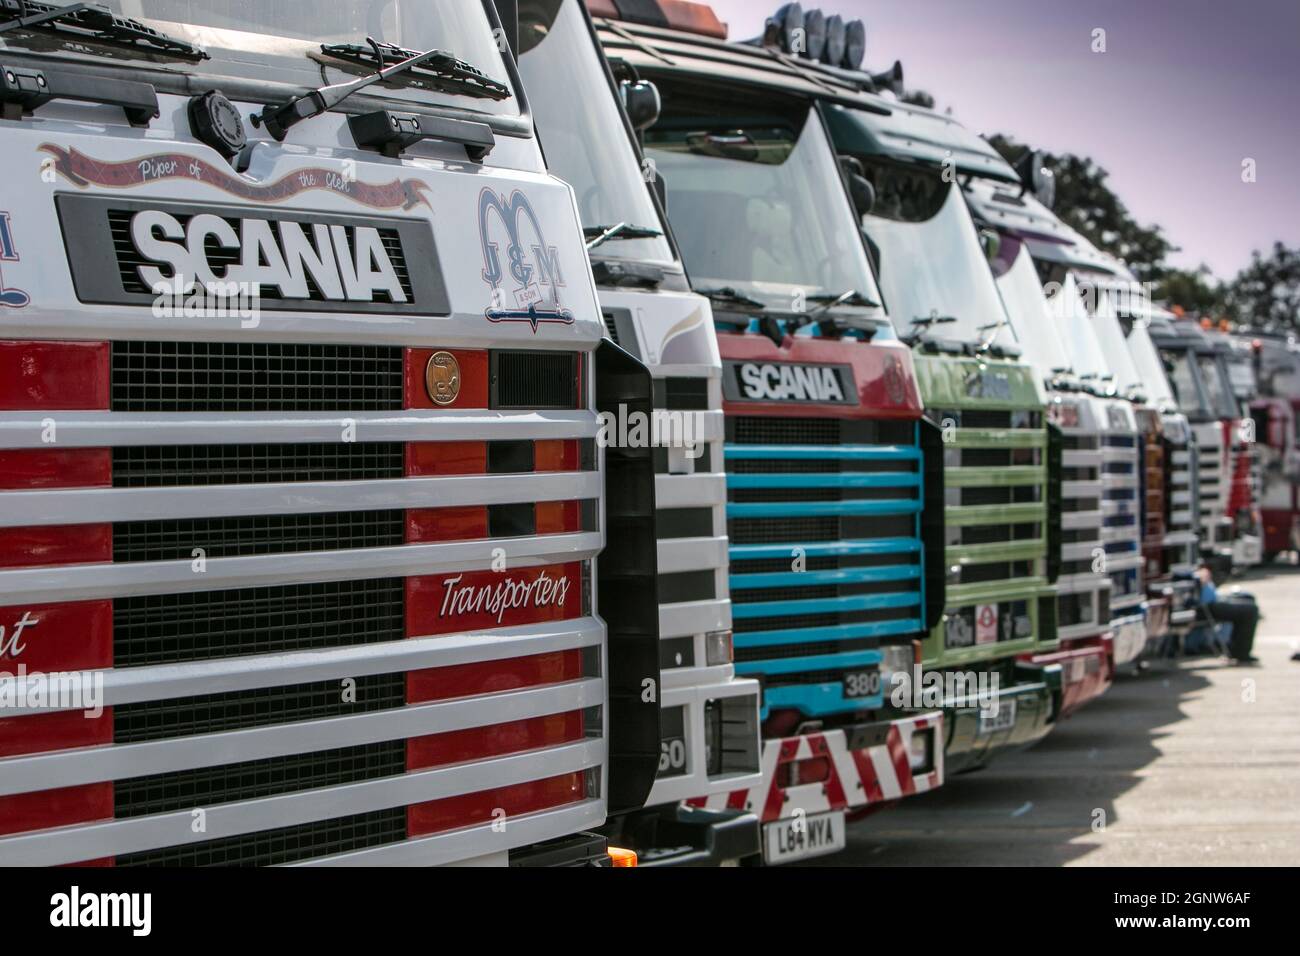 Griffin gathering, Ipswich 2014 Scania, vintage HGV trucks Stock Photo